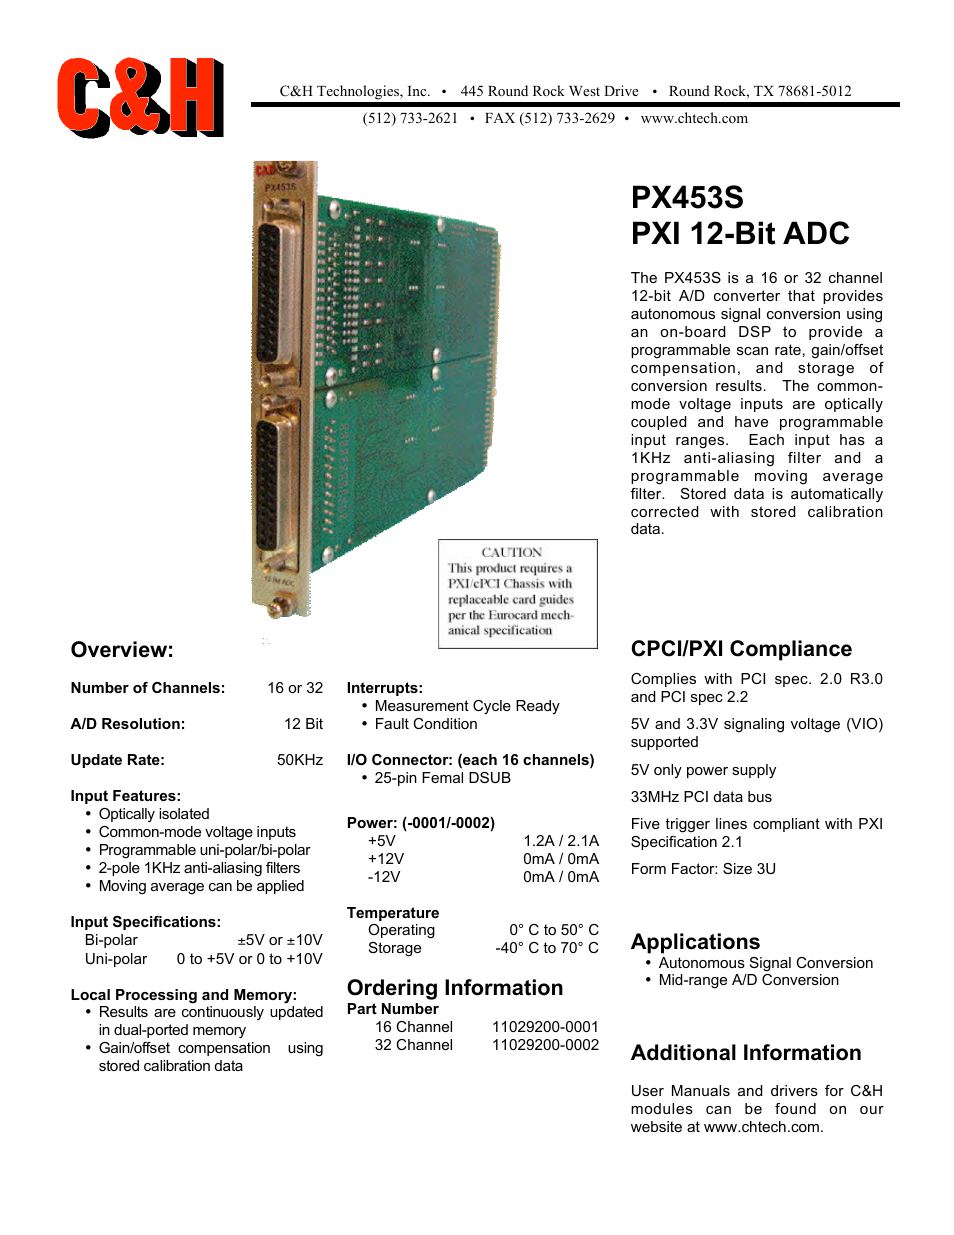 PXI 12-Bit ADC PX453S